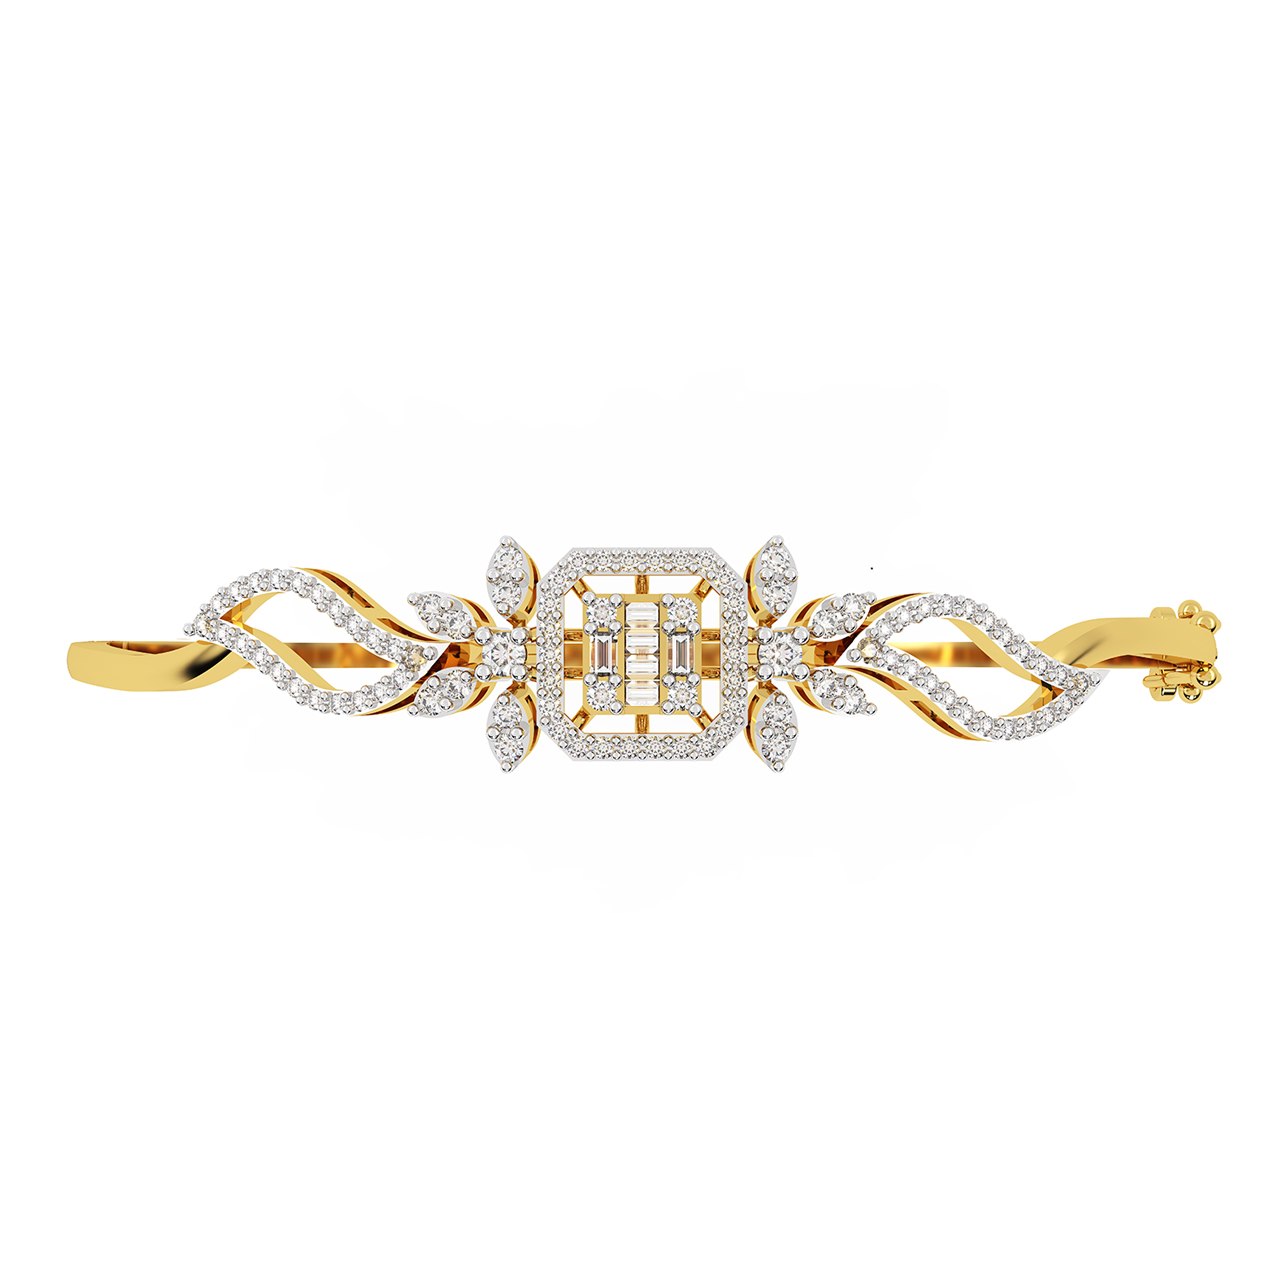 Gallery Designs Diamond Tennis Bracelet 5cttw 14KY LG67501030 - London Gold